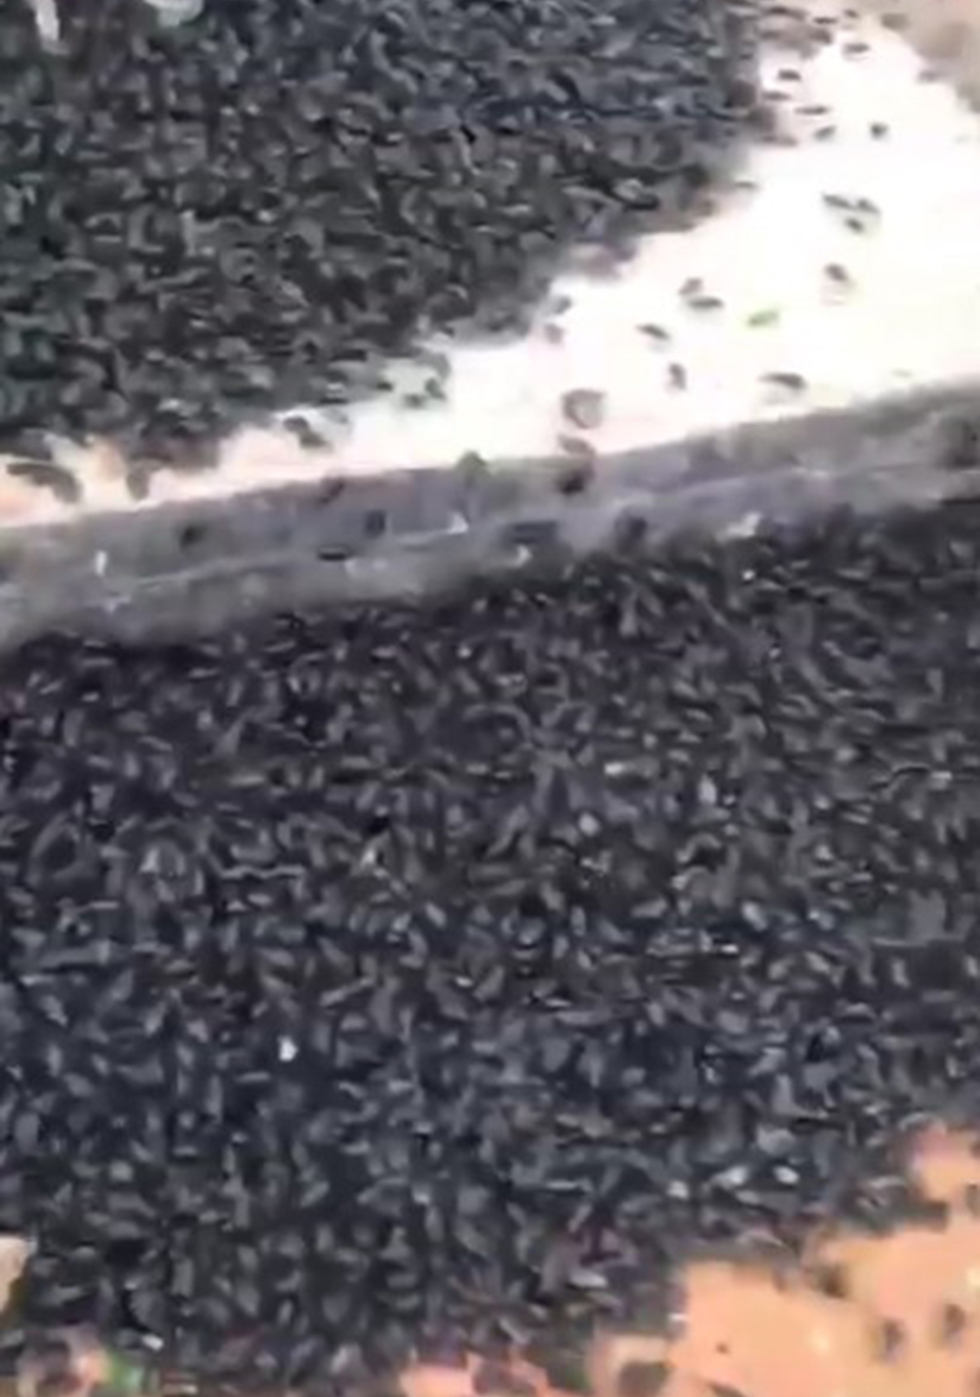 Beetles invade Medina